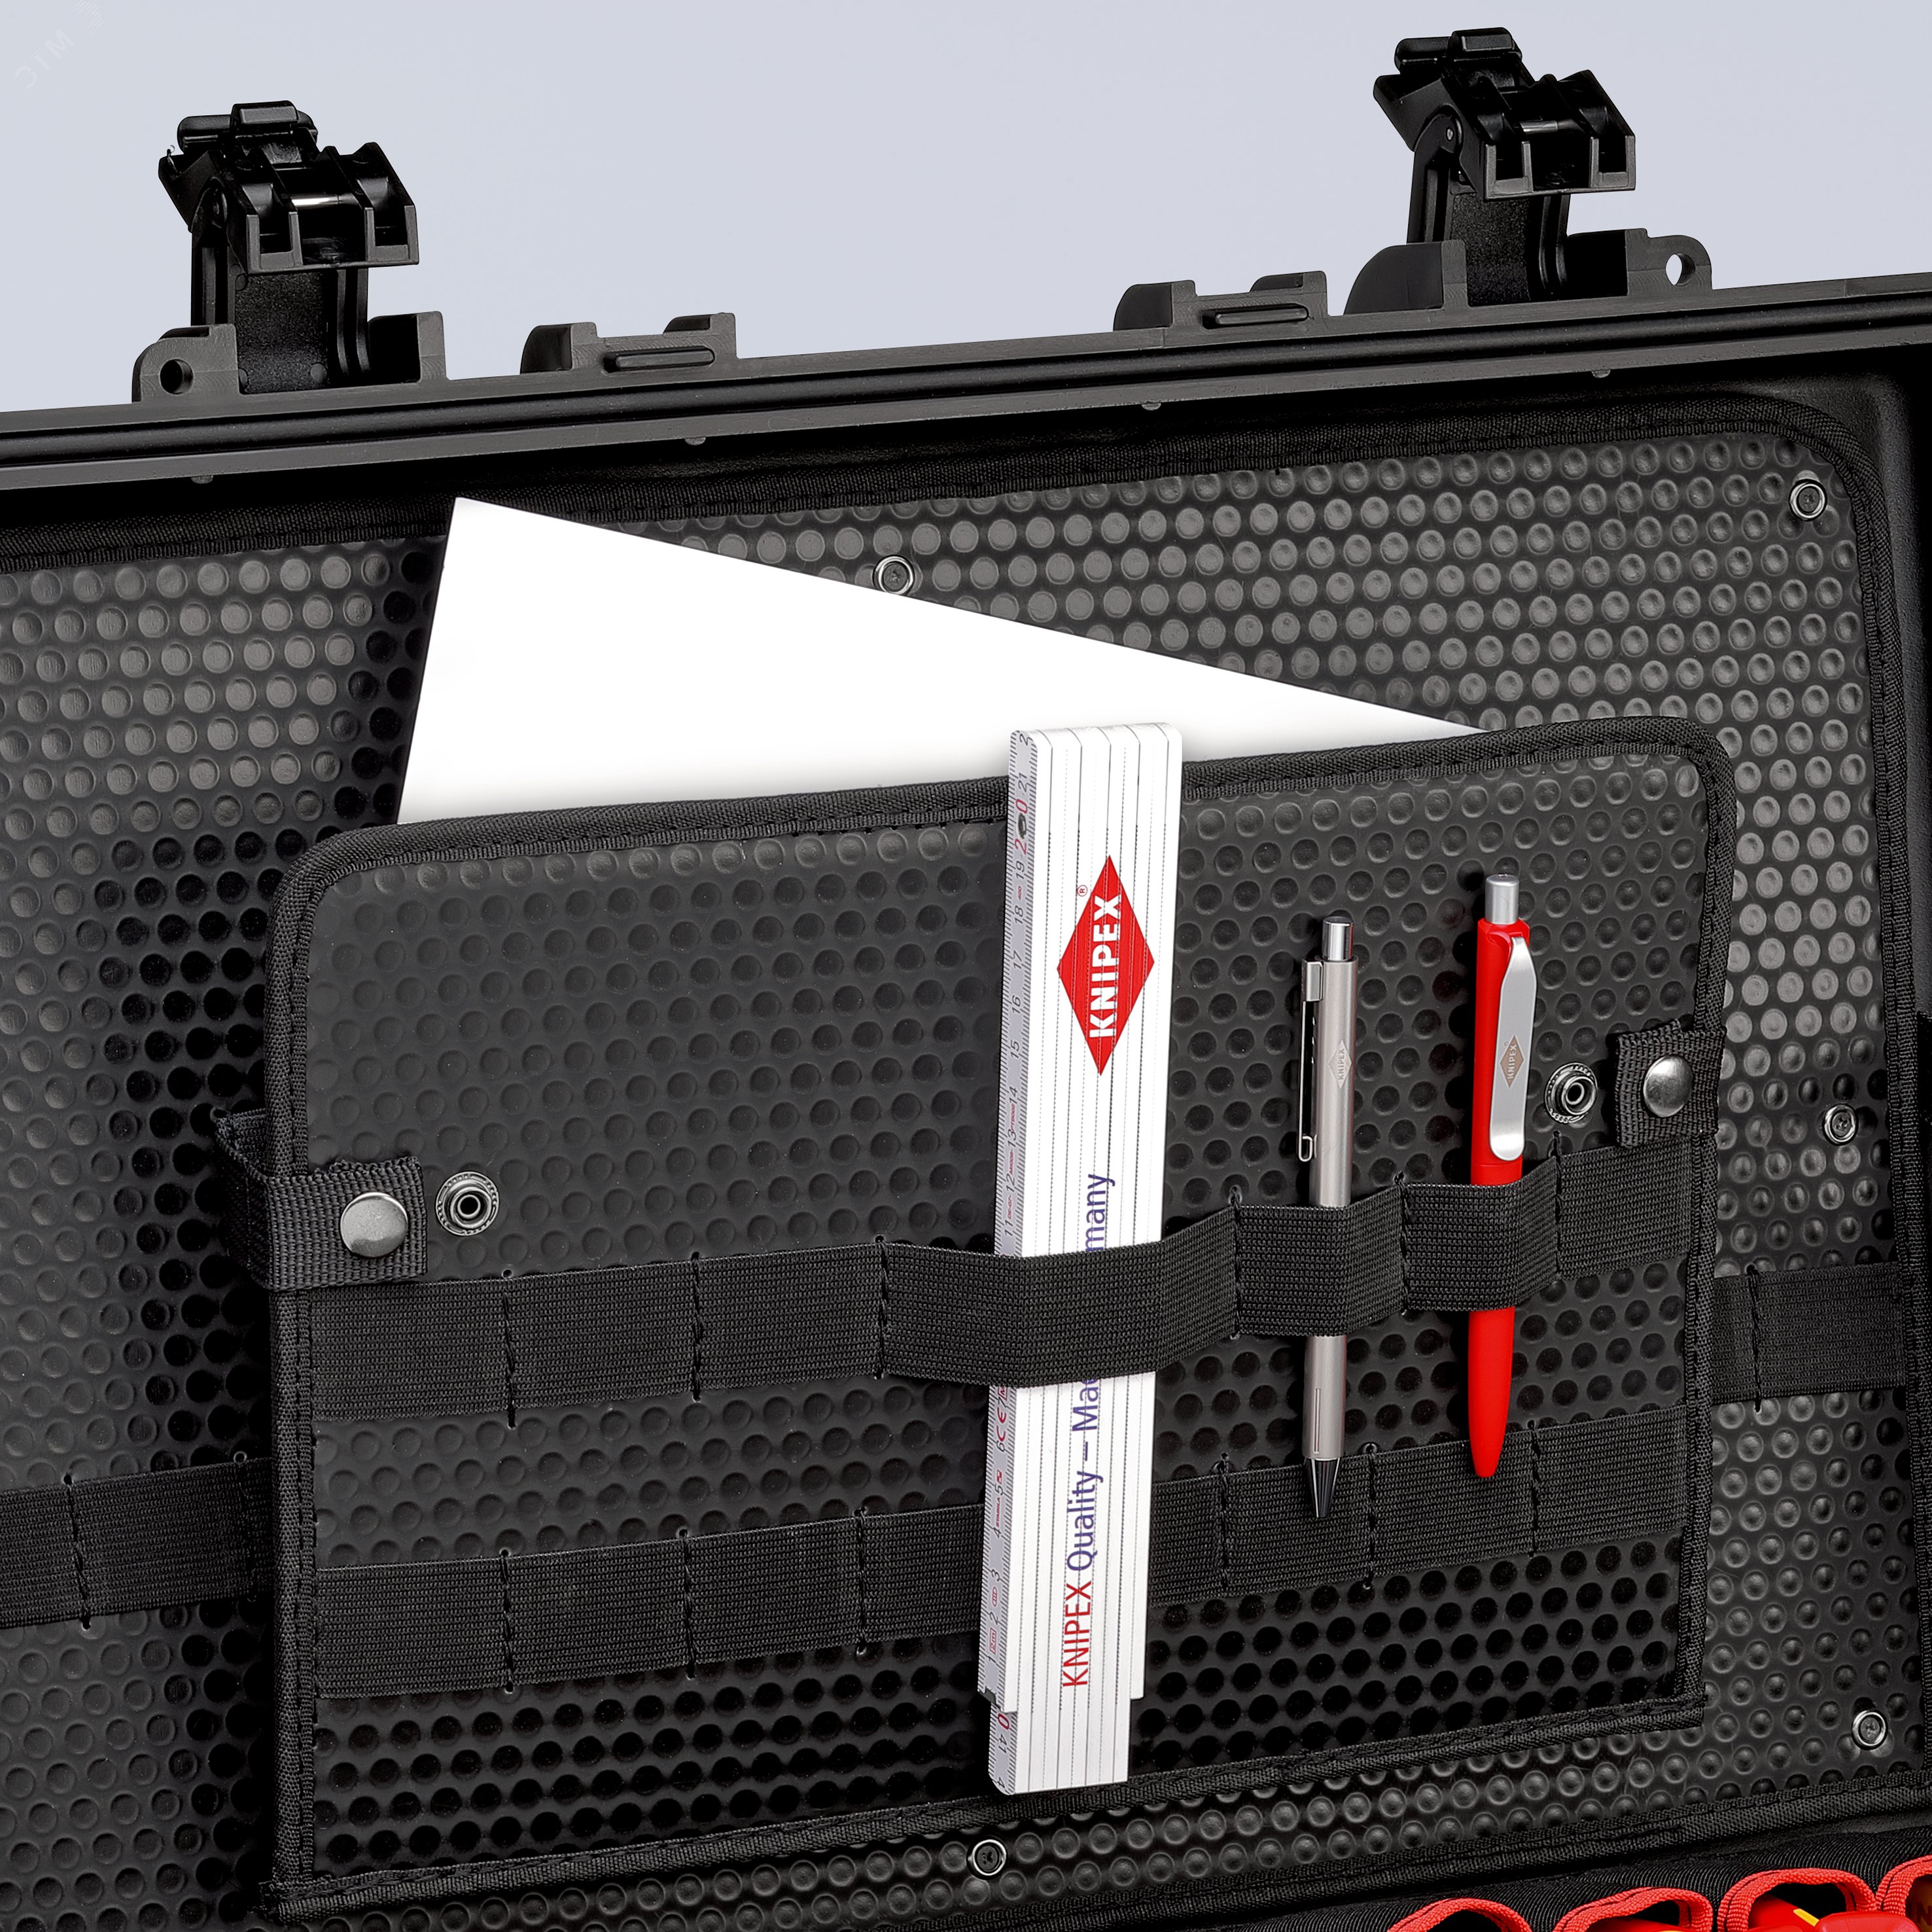 RobusT34 ElecTric чемодан с инструментами по электрике 26 предметов KN-002136 KNIPEX - превью 3